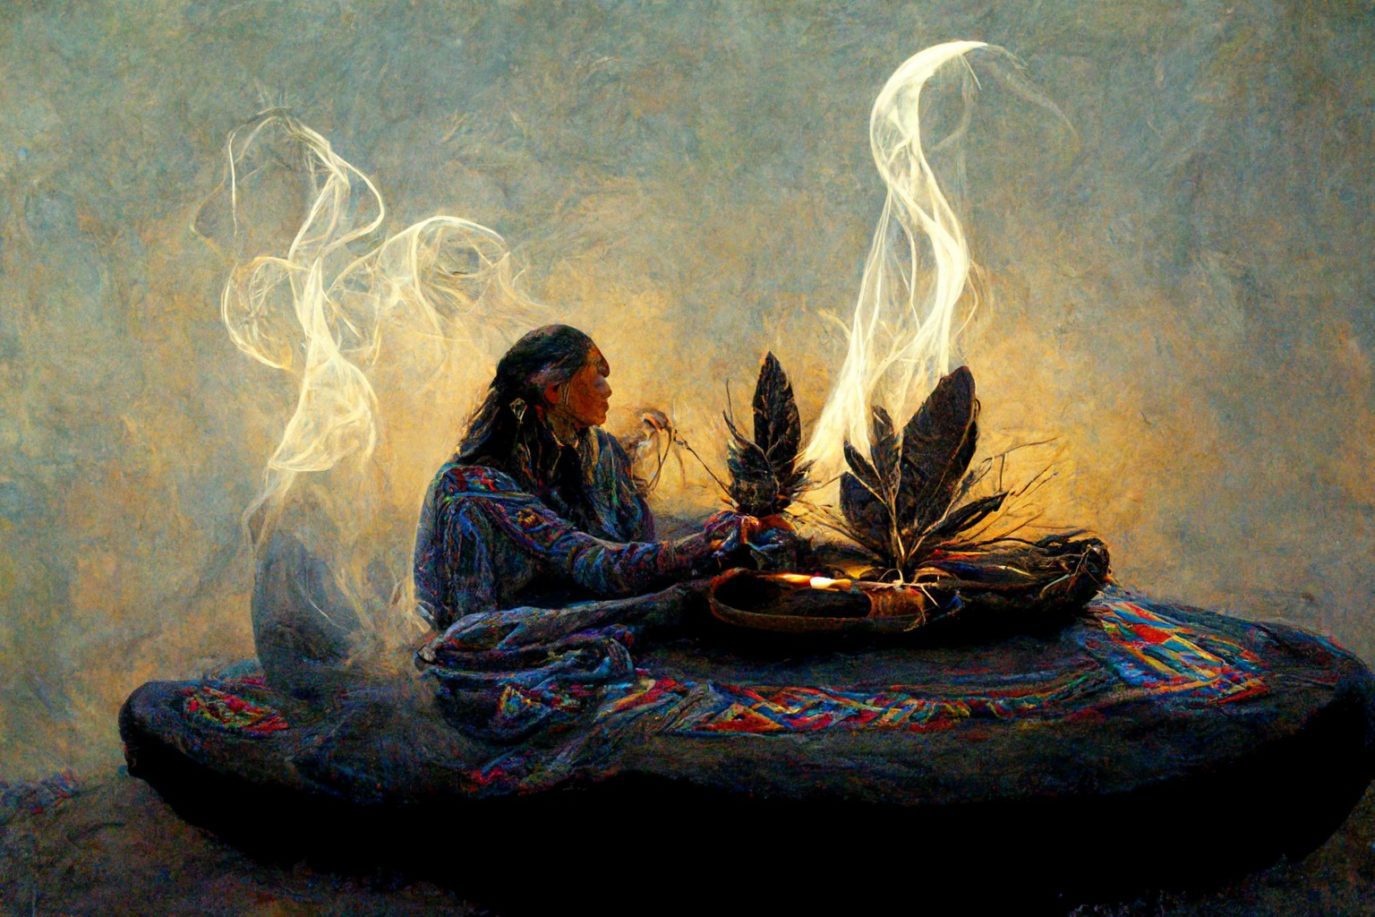 Native AMerican sage smudging ceremony